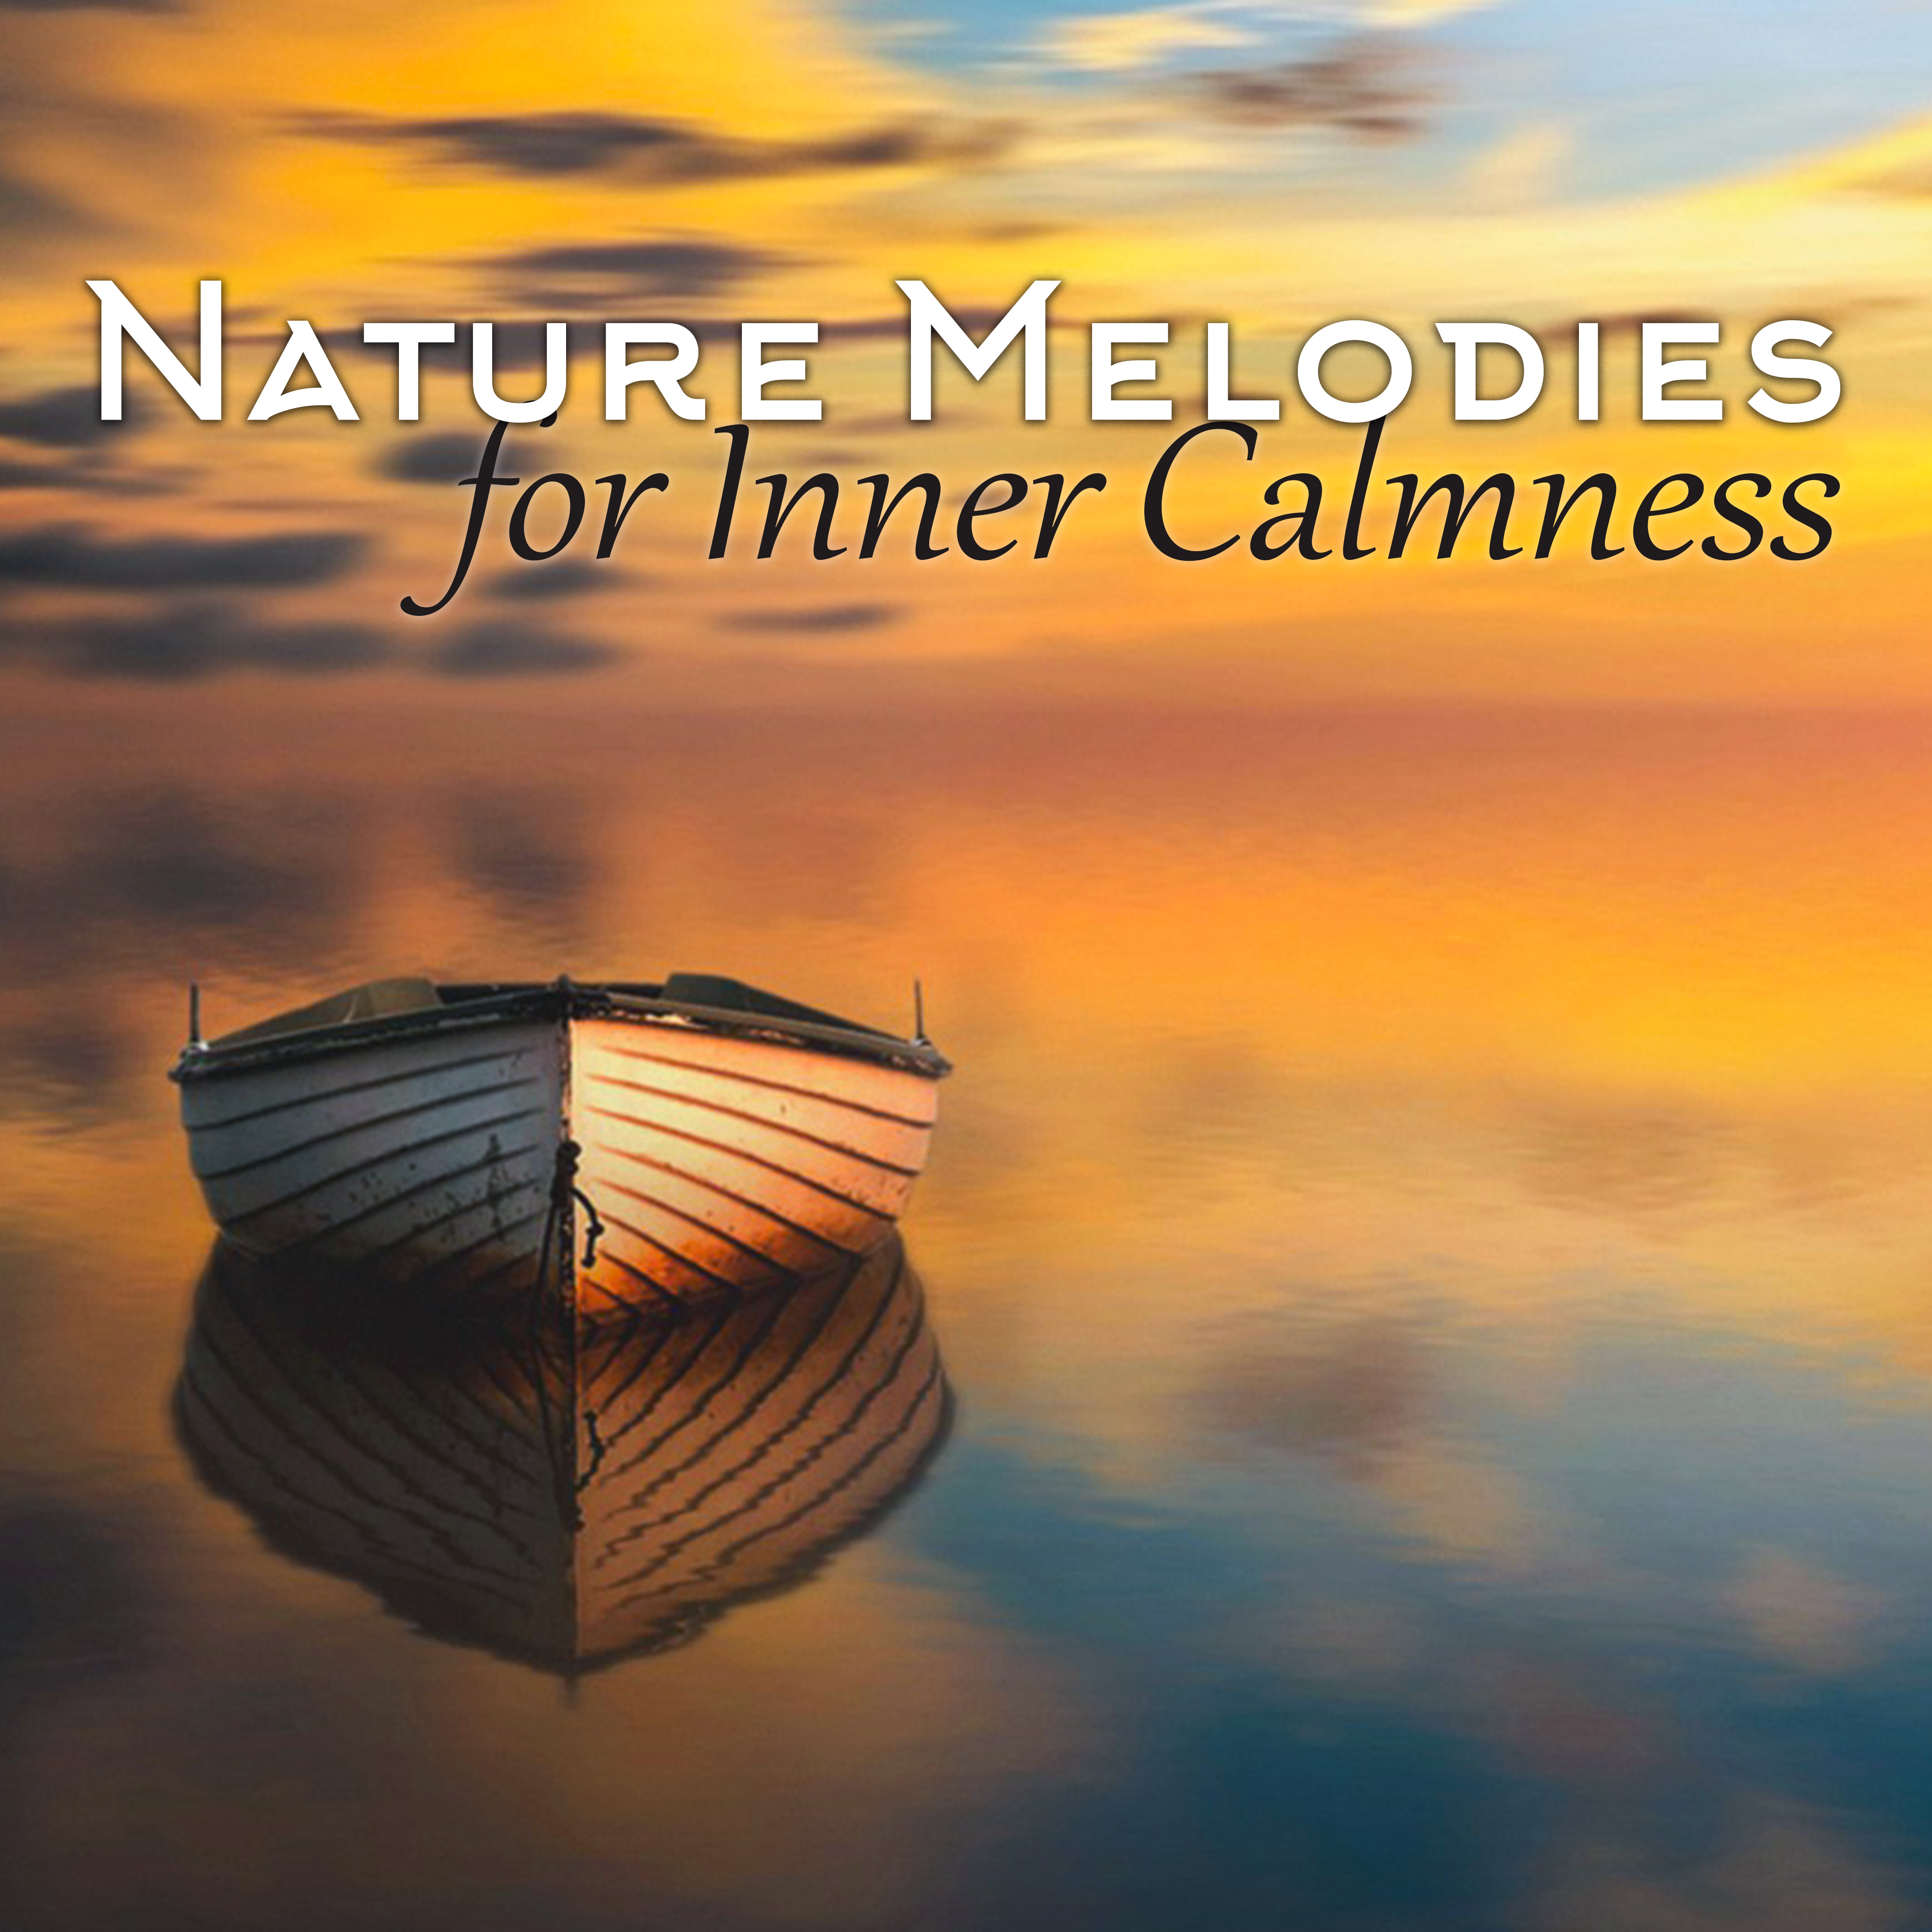 Nature Melodies for Inner Calmness